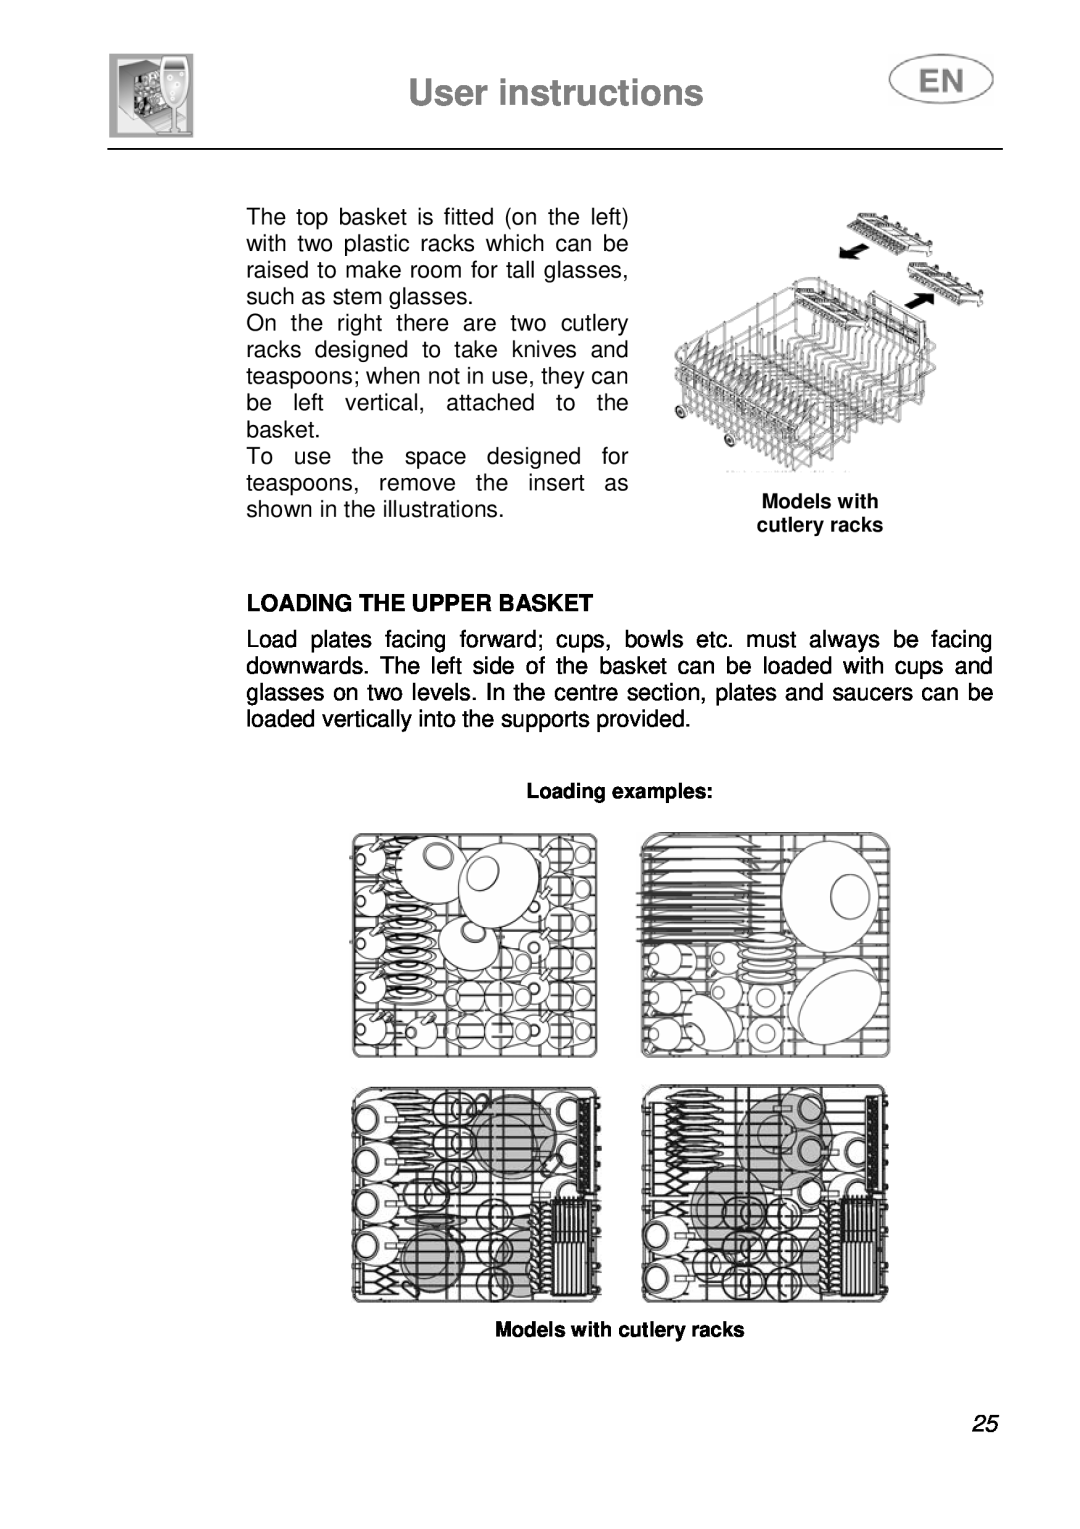 Smeg LVF649B instruction manual User instructions, Loading The Upper Basket, Loading examples Models with cutlery racks 